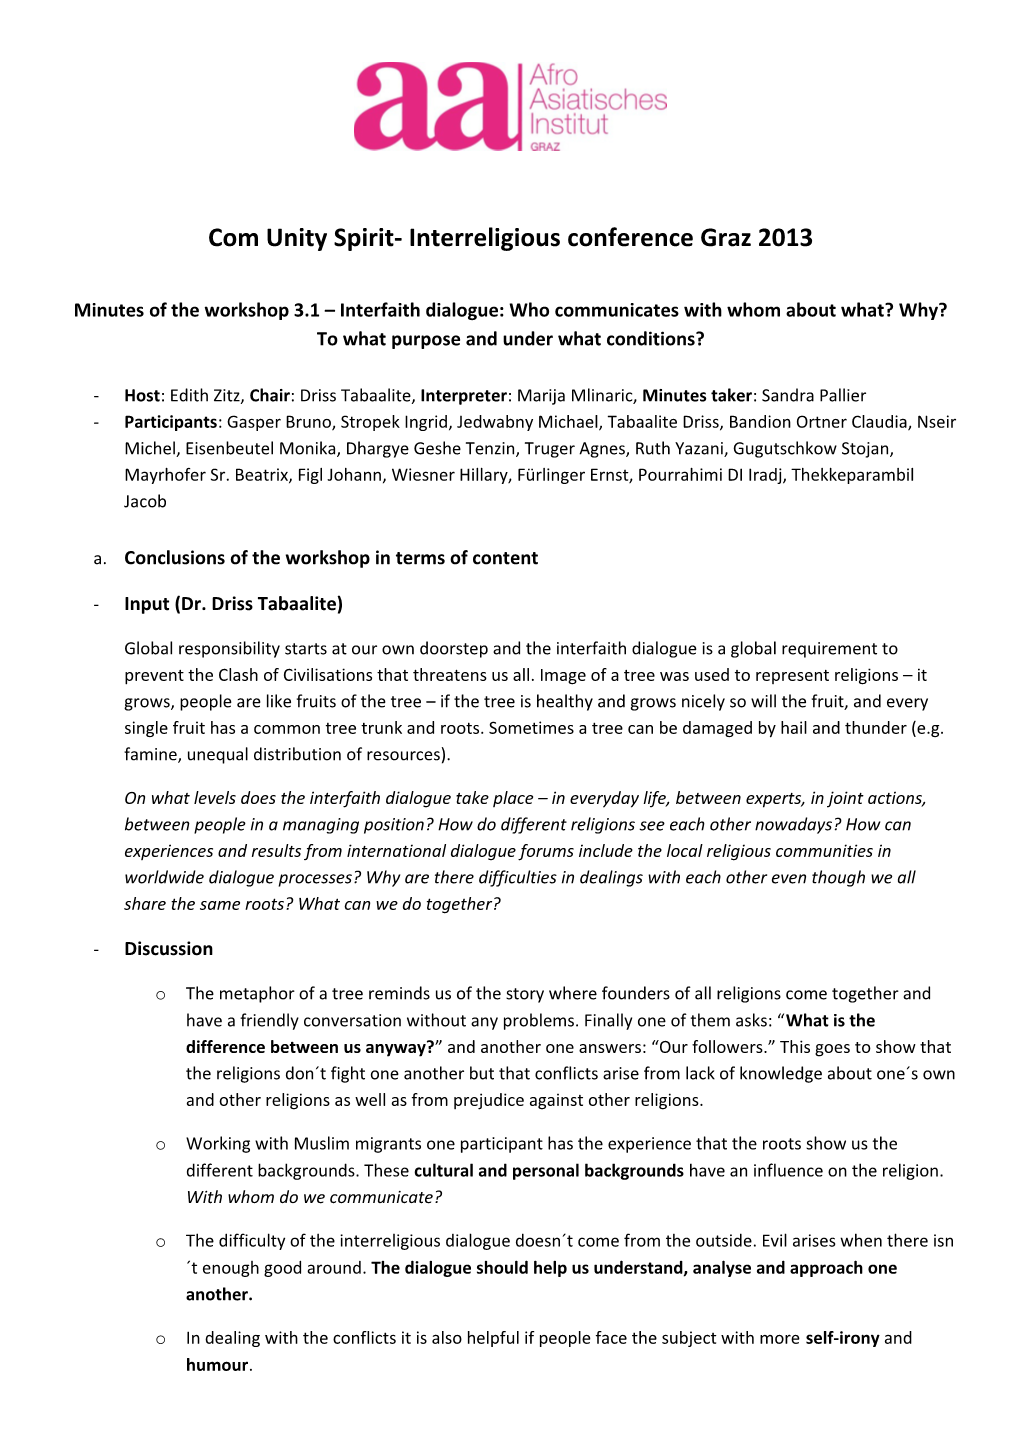 Com Unity Spirit- Interreligious Conference Graz 2013